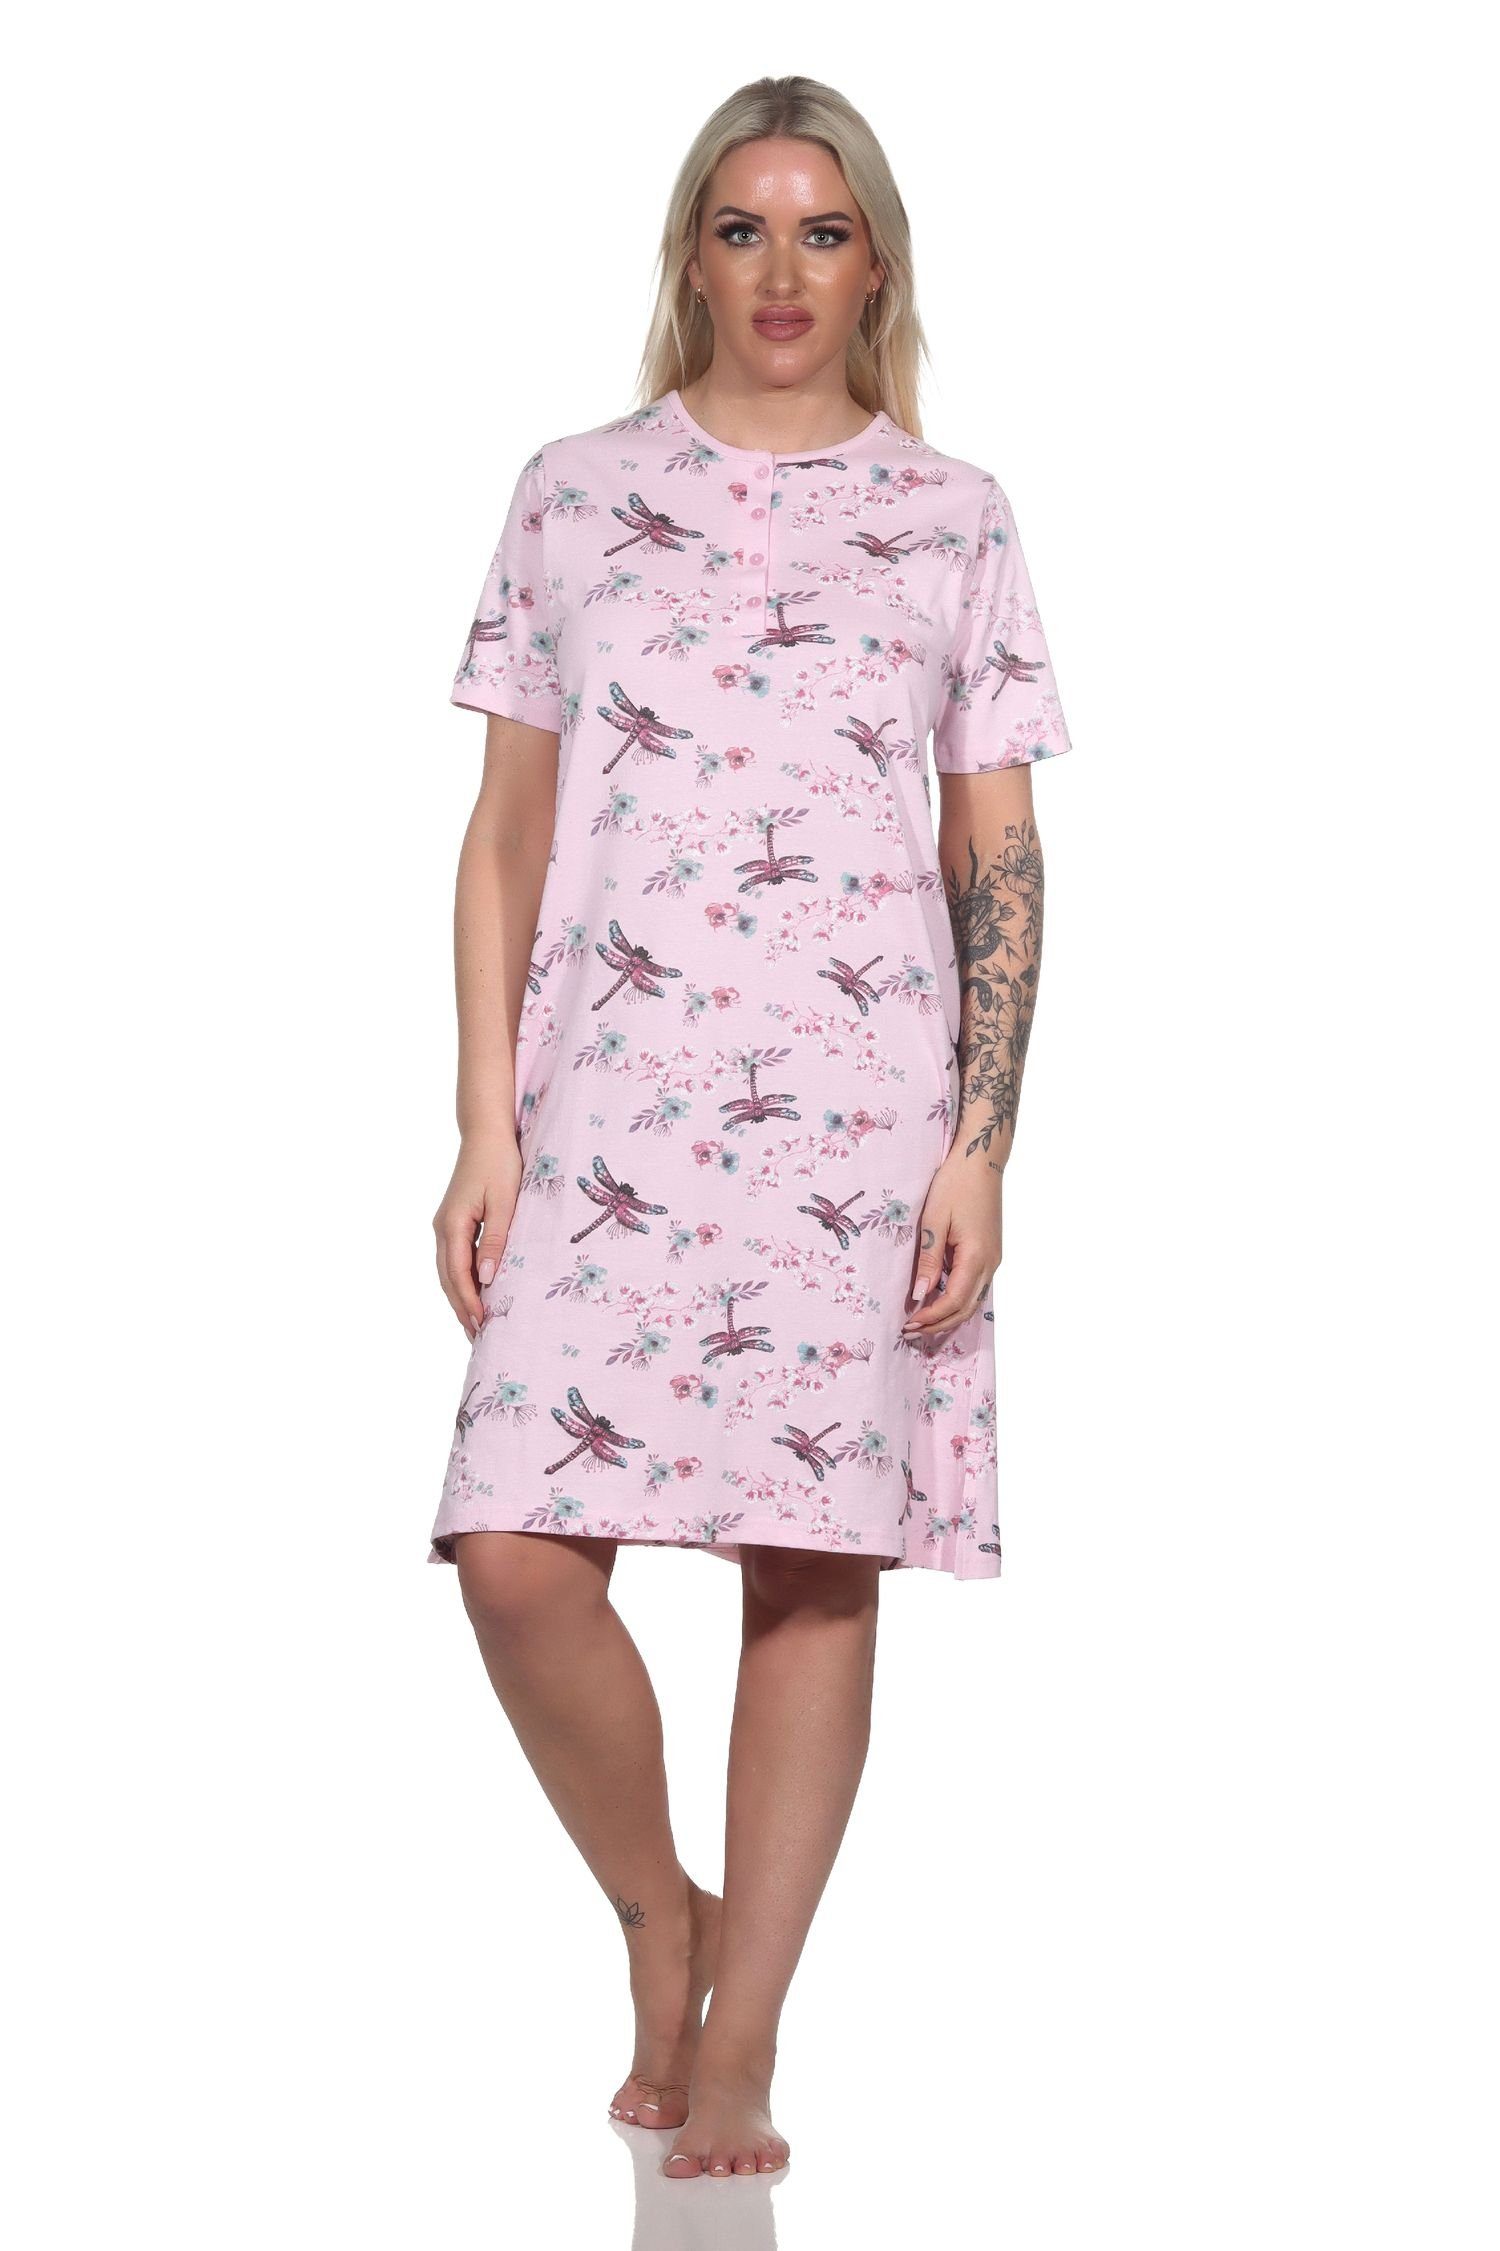 Normann Nachthemd Damen kurzarm Nachthemd floraler Alloverprint und Knopfleiste am Hals rosa